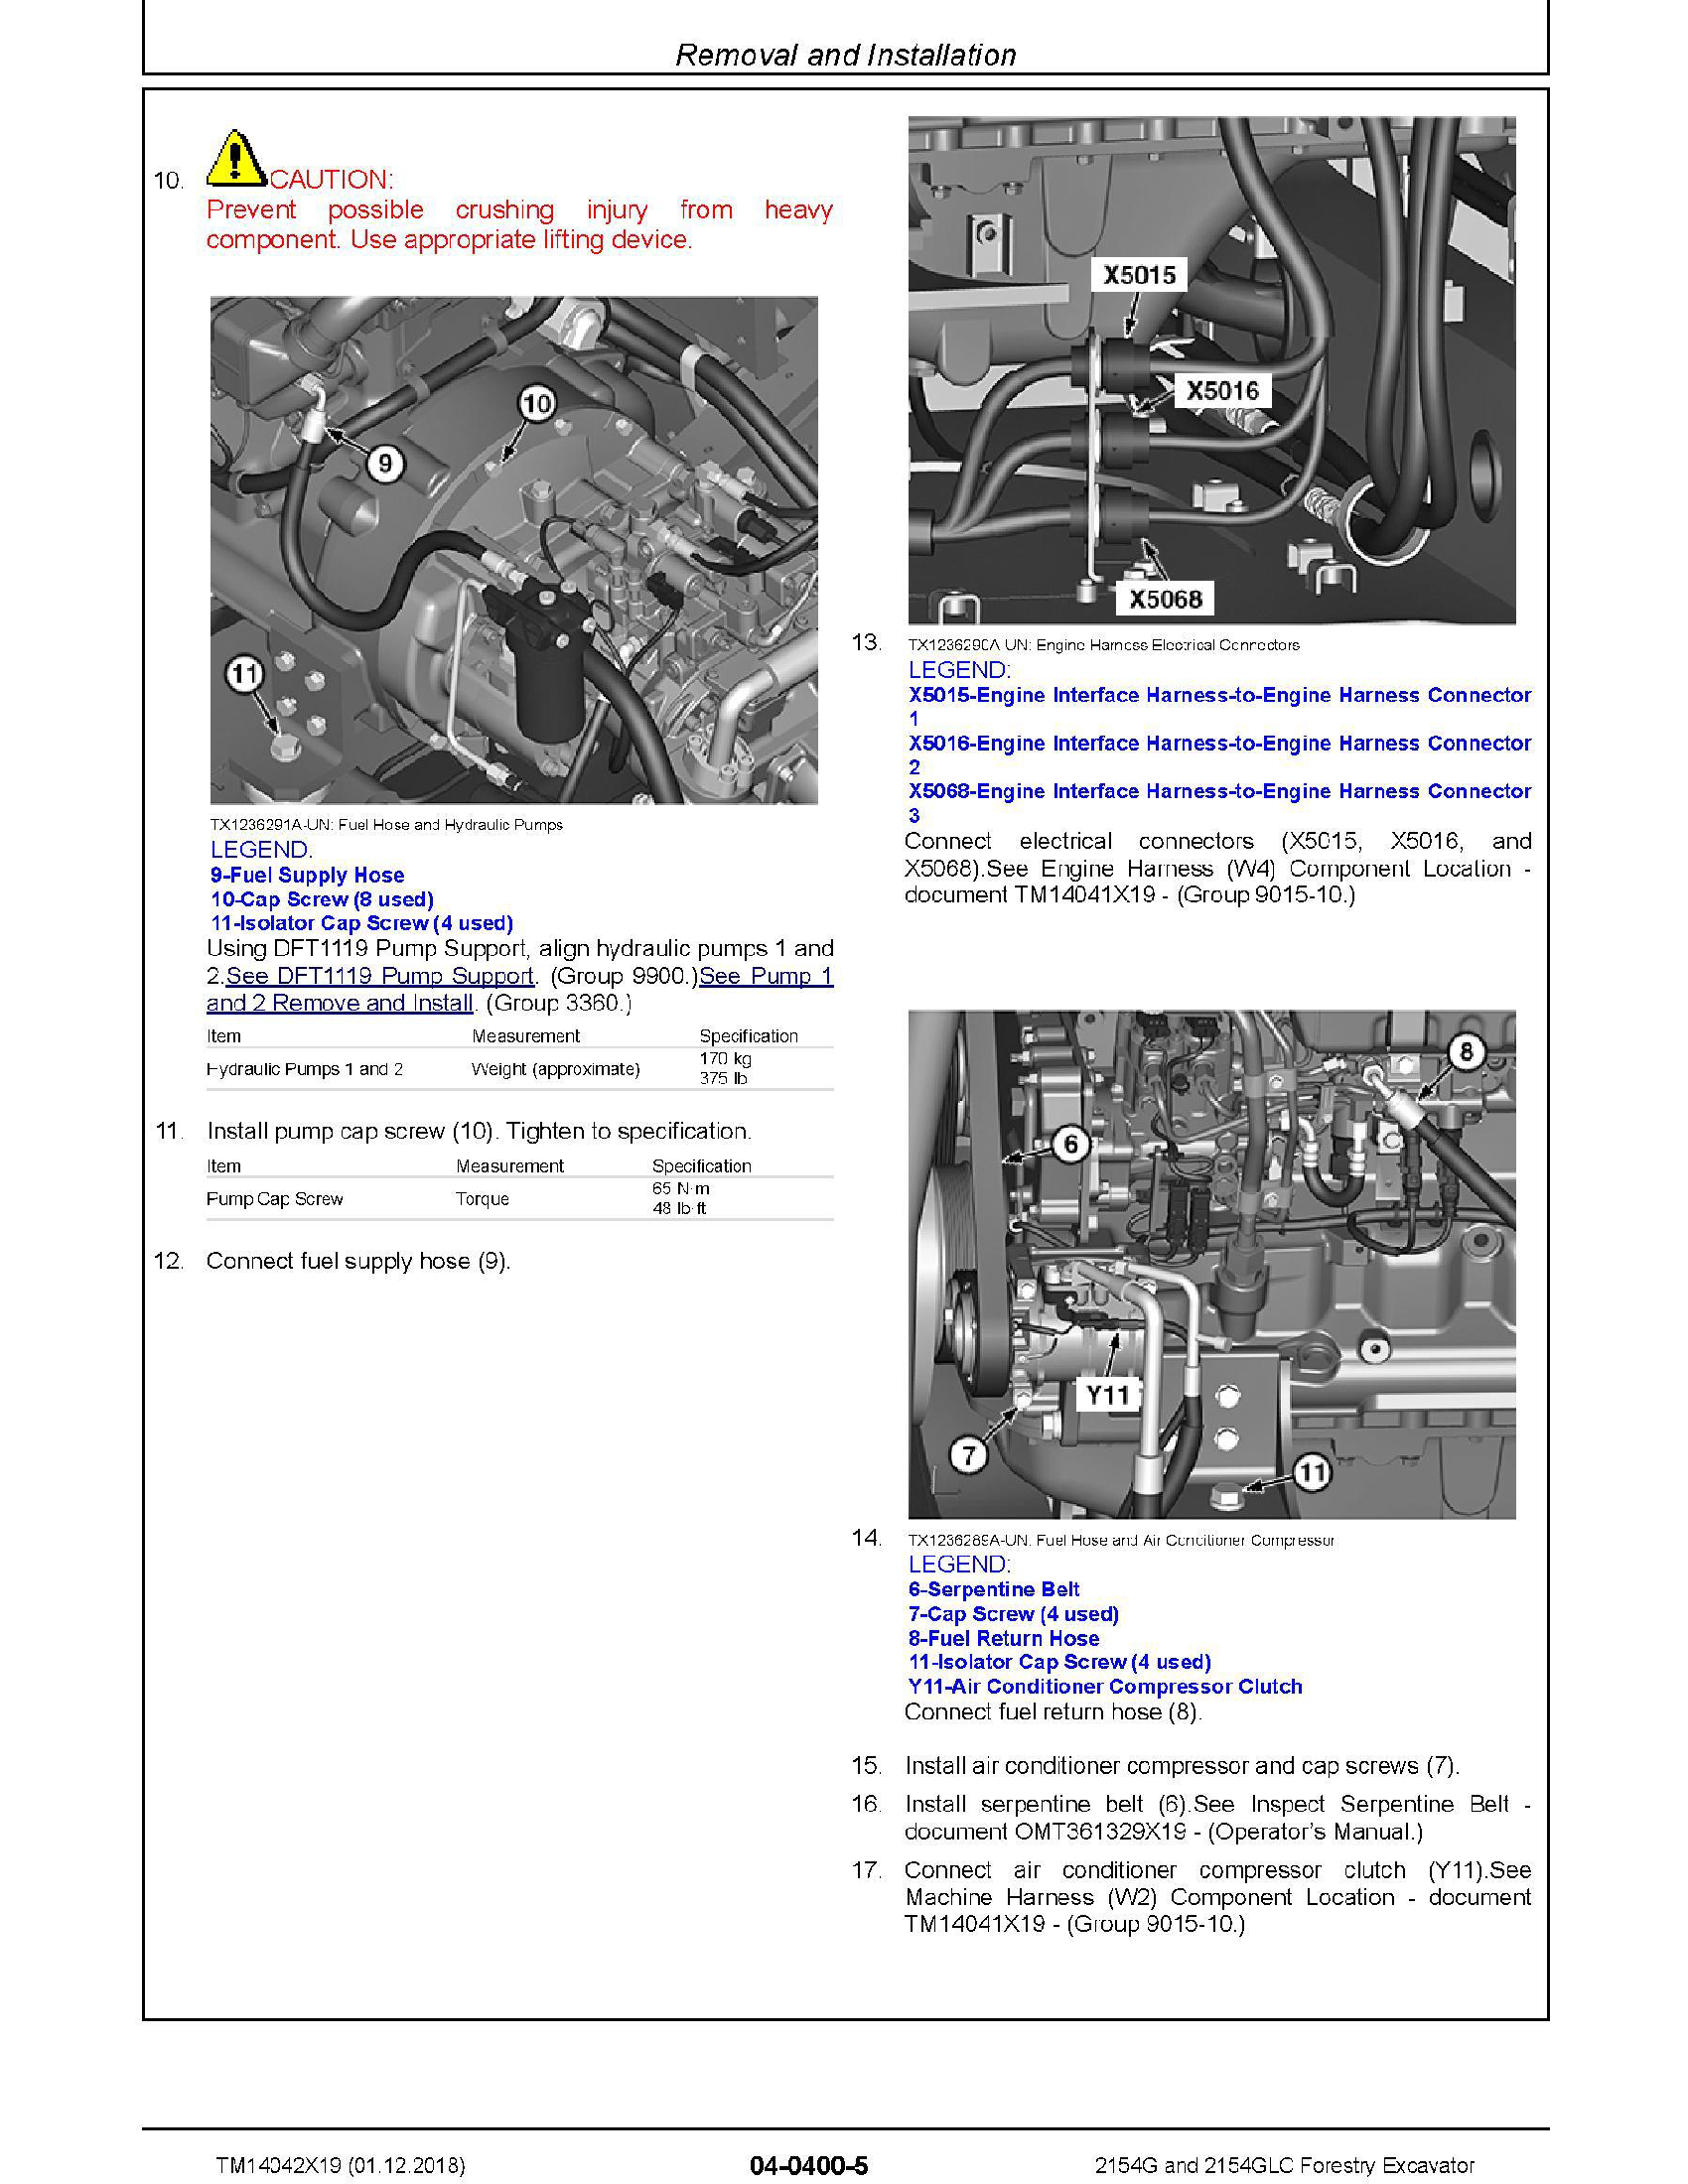 John Deere 1YH manual pdf